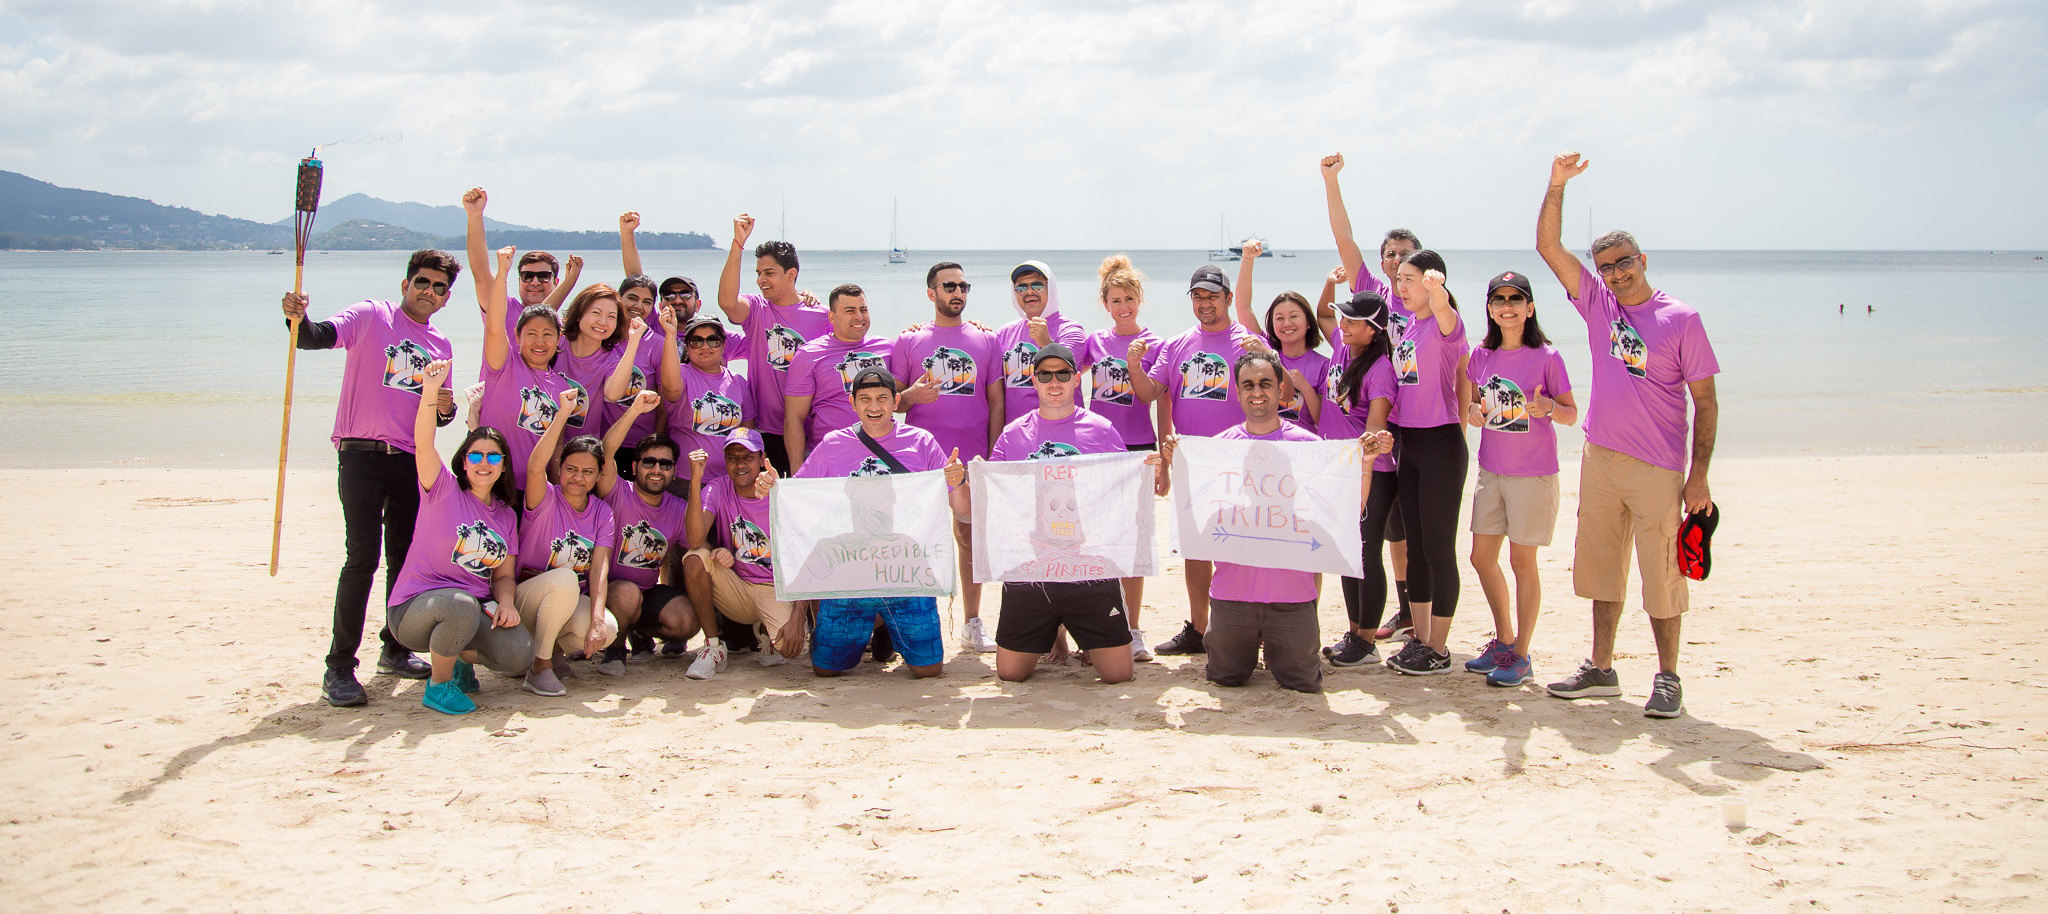 Survivor Island - Taco Bell Corporate Team Building - July 2020 - Phuket